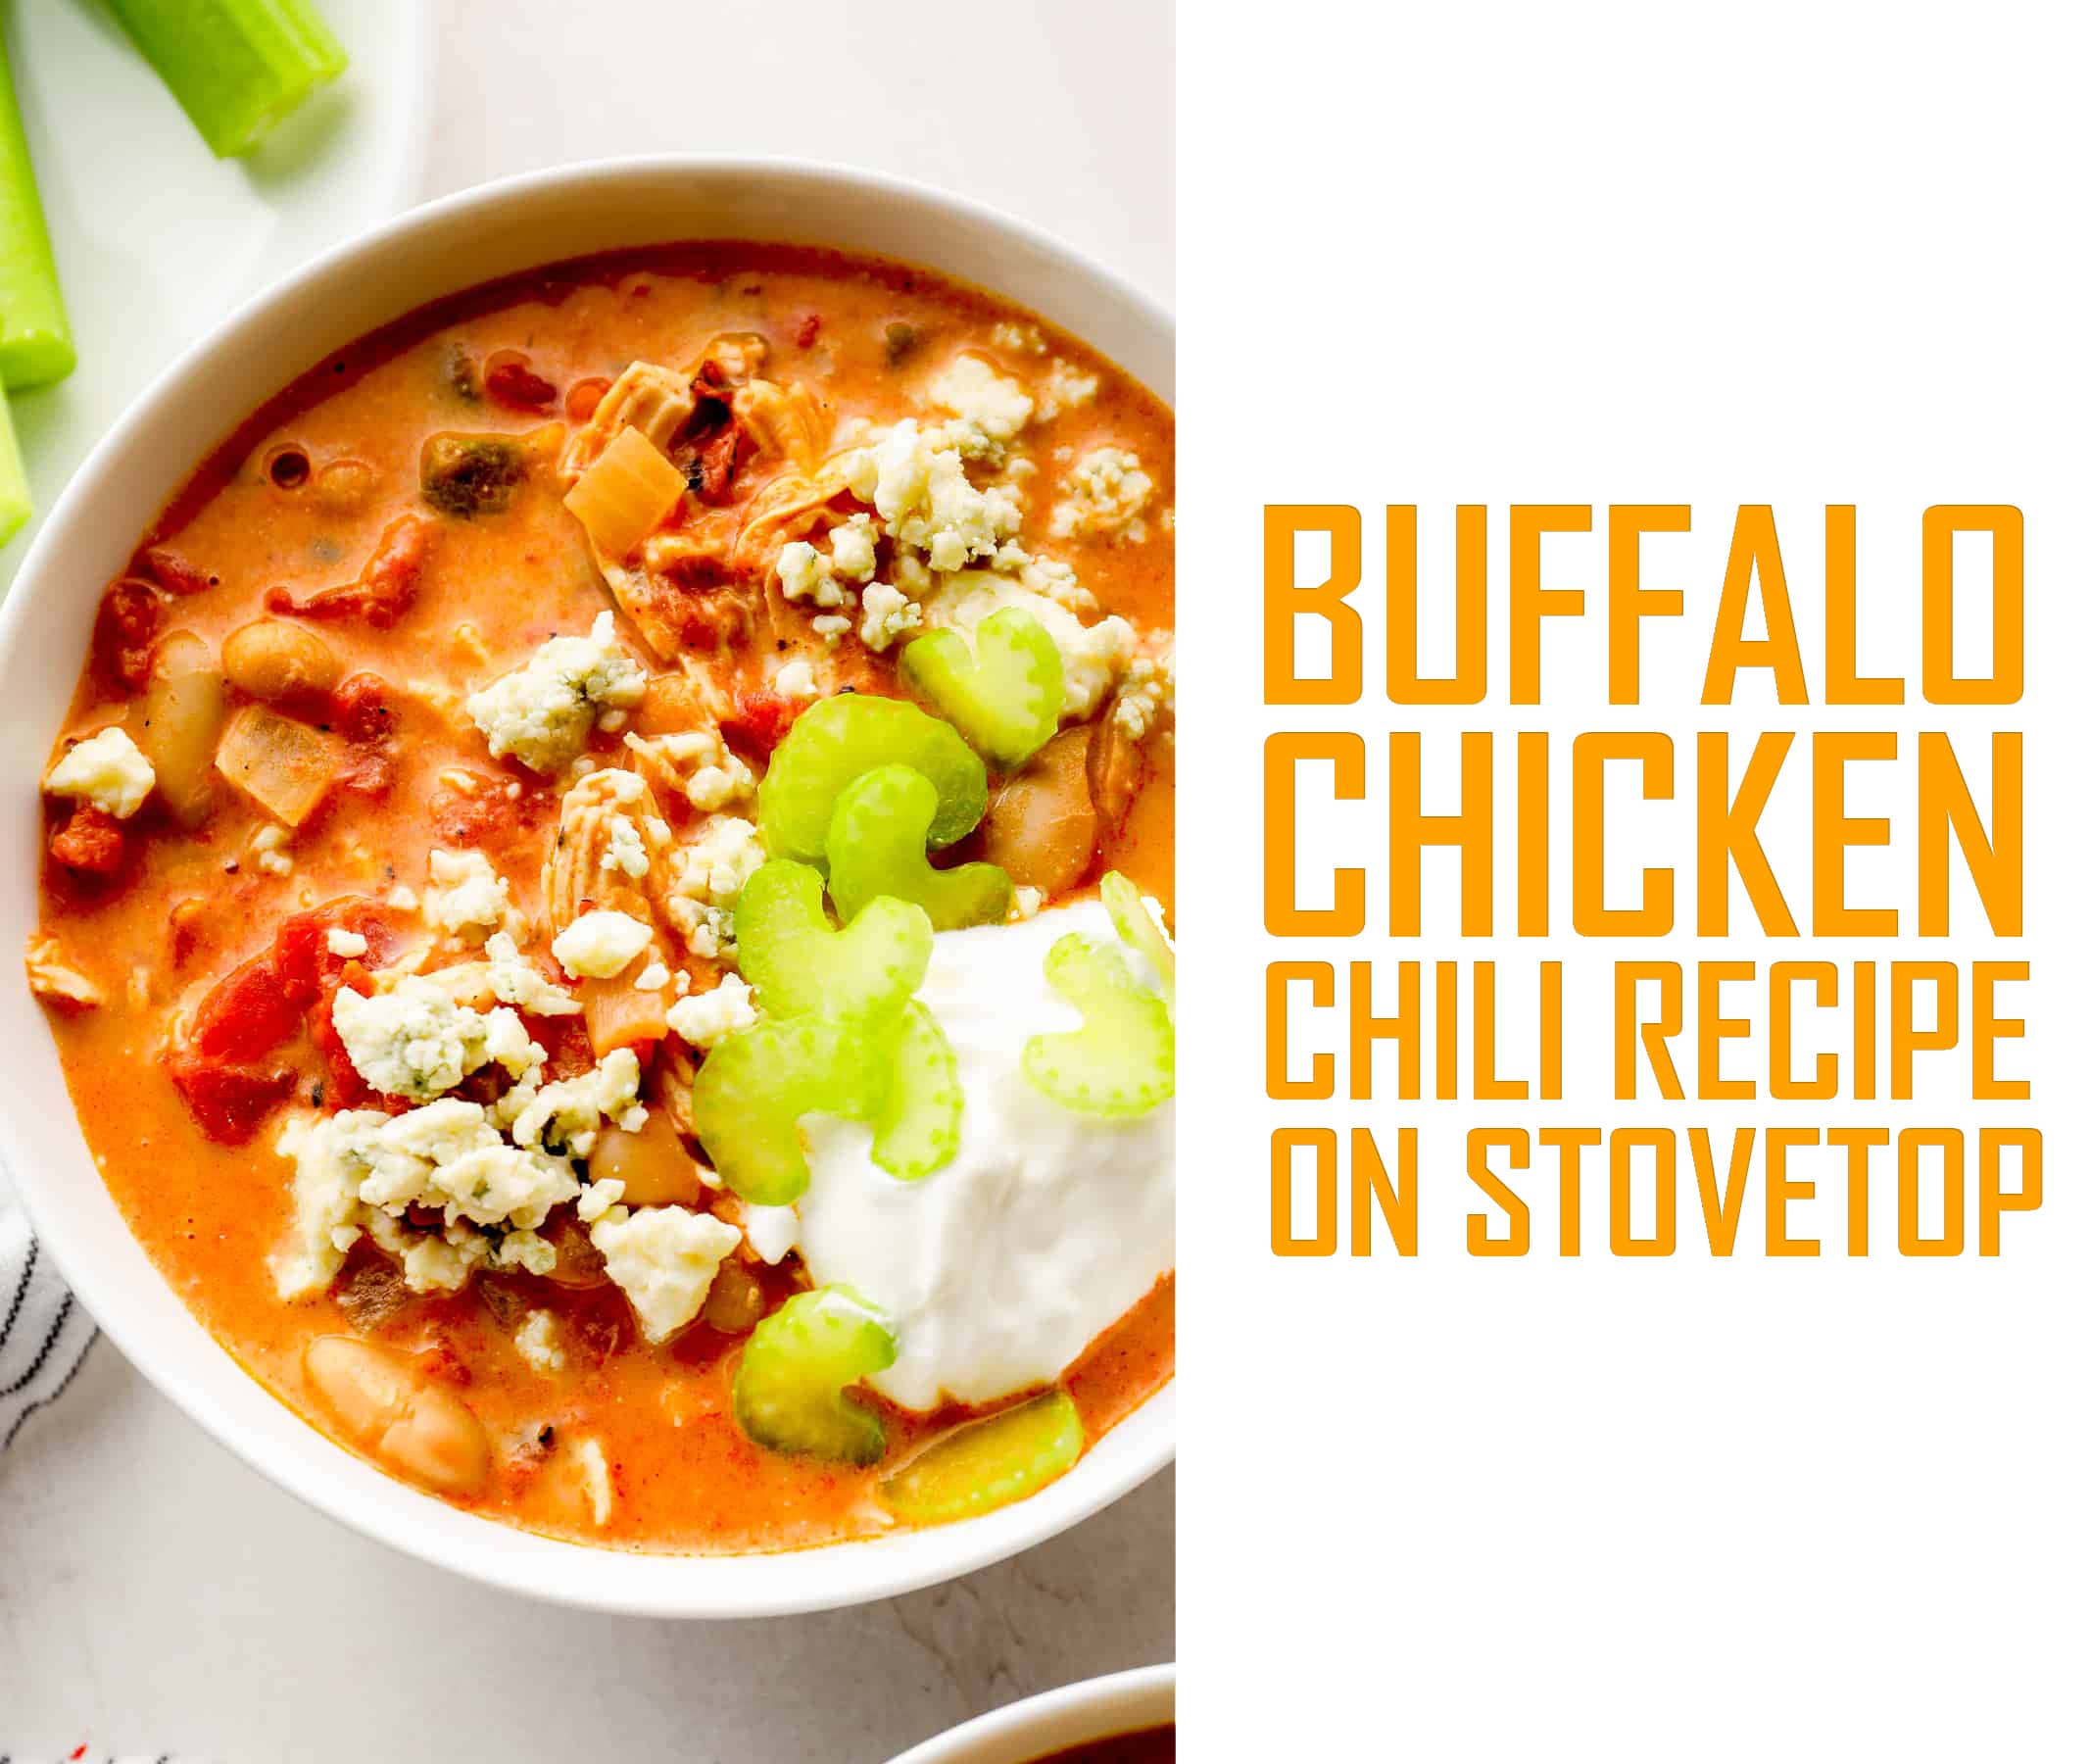 Buffalo chicken chili recipe on stovetop